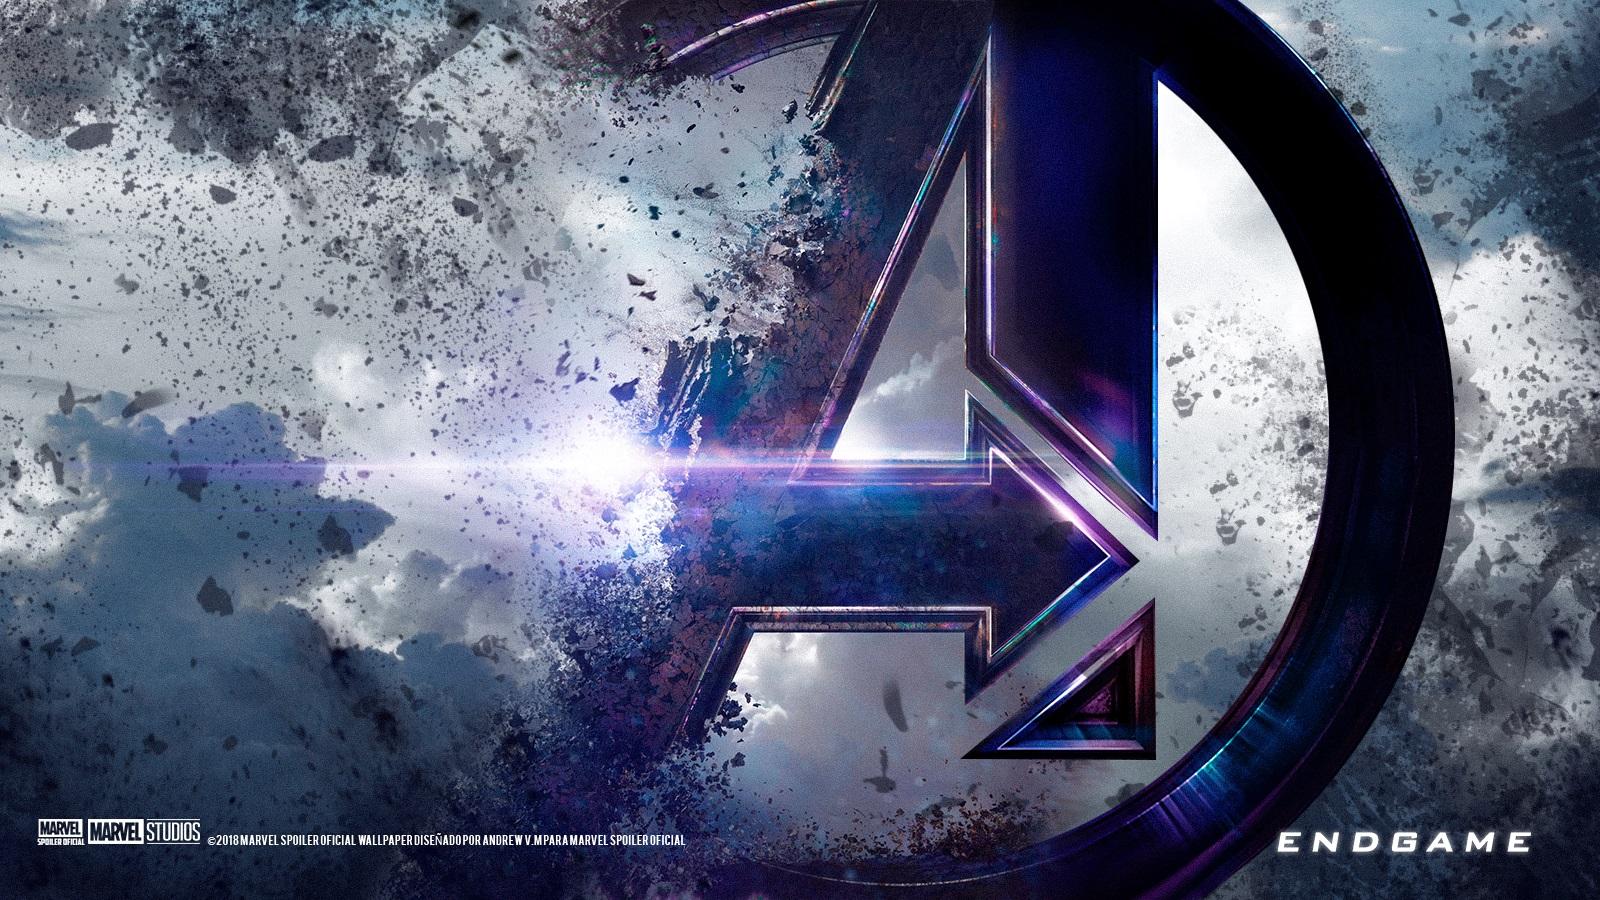 Best Avengers Endgame Wallpaper HD Arts Ideas